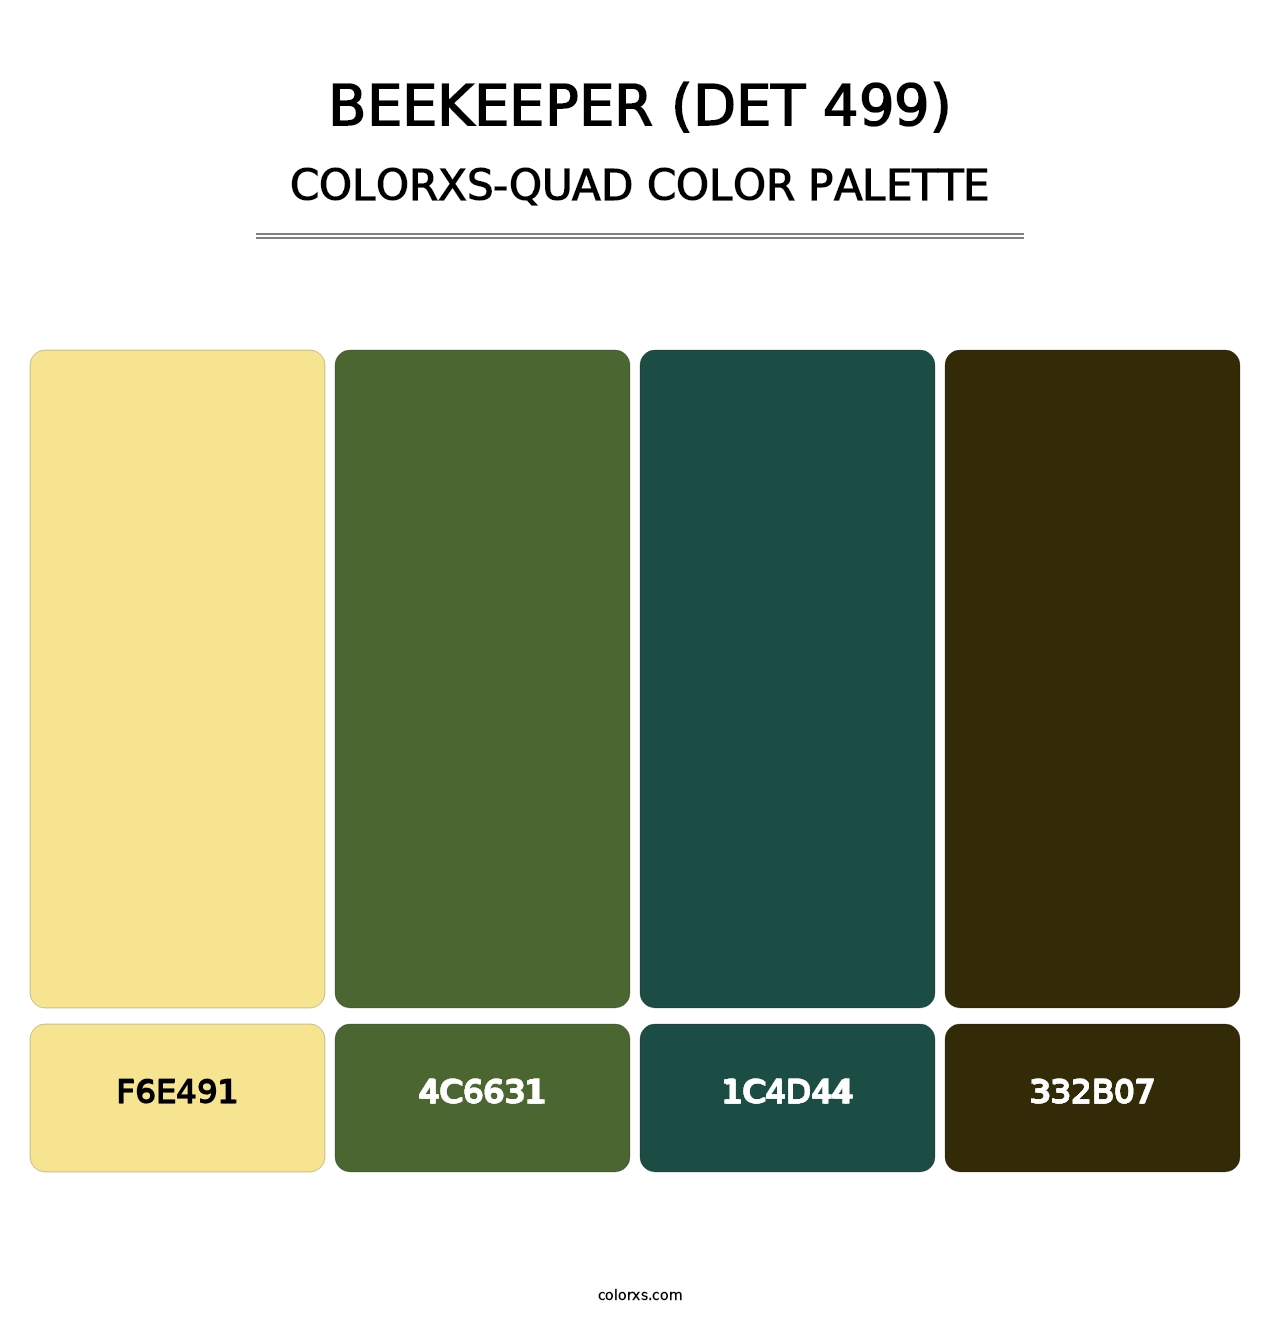 Beekeeper (DET 499) - Colorxs Quad Palette